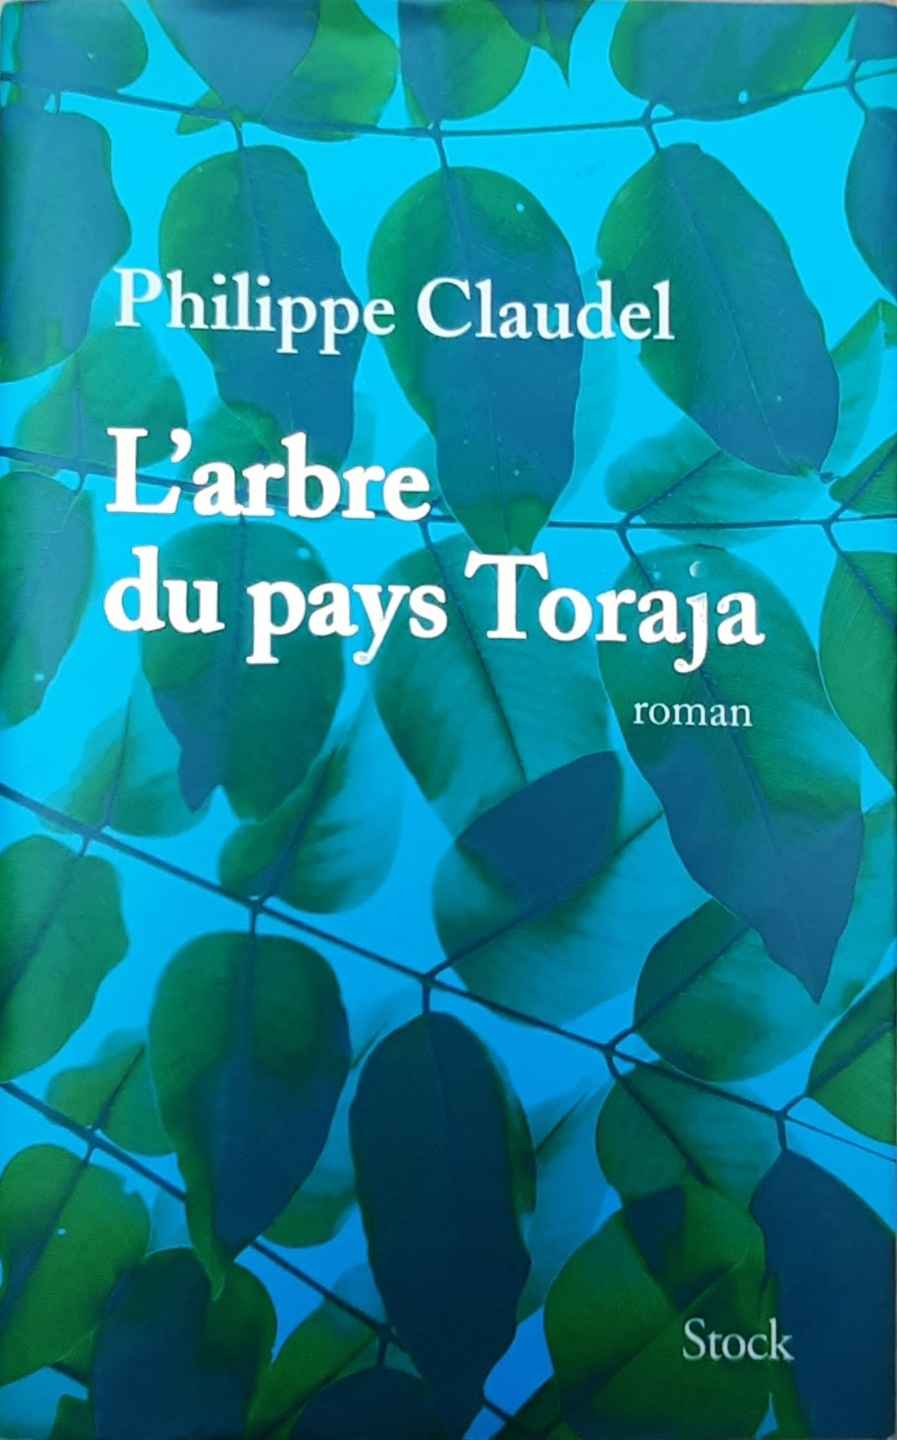 Book cover 202108261858: CLAUDEL Philippe | l